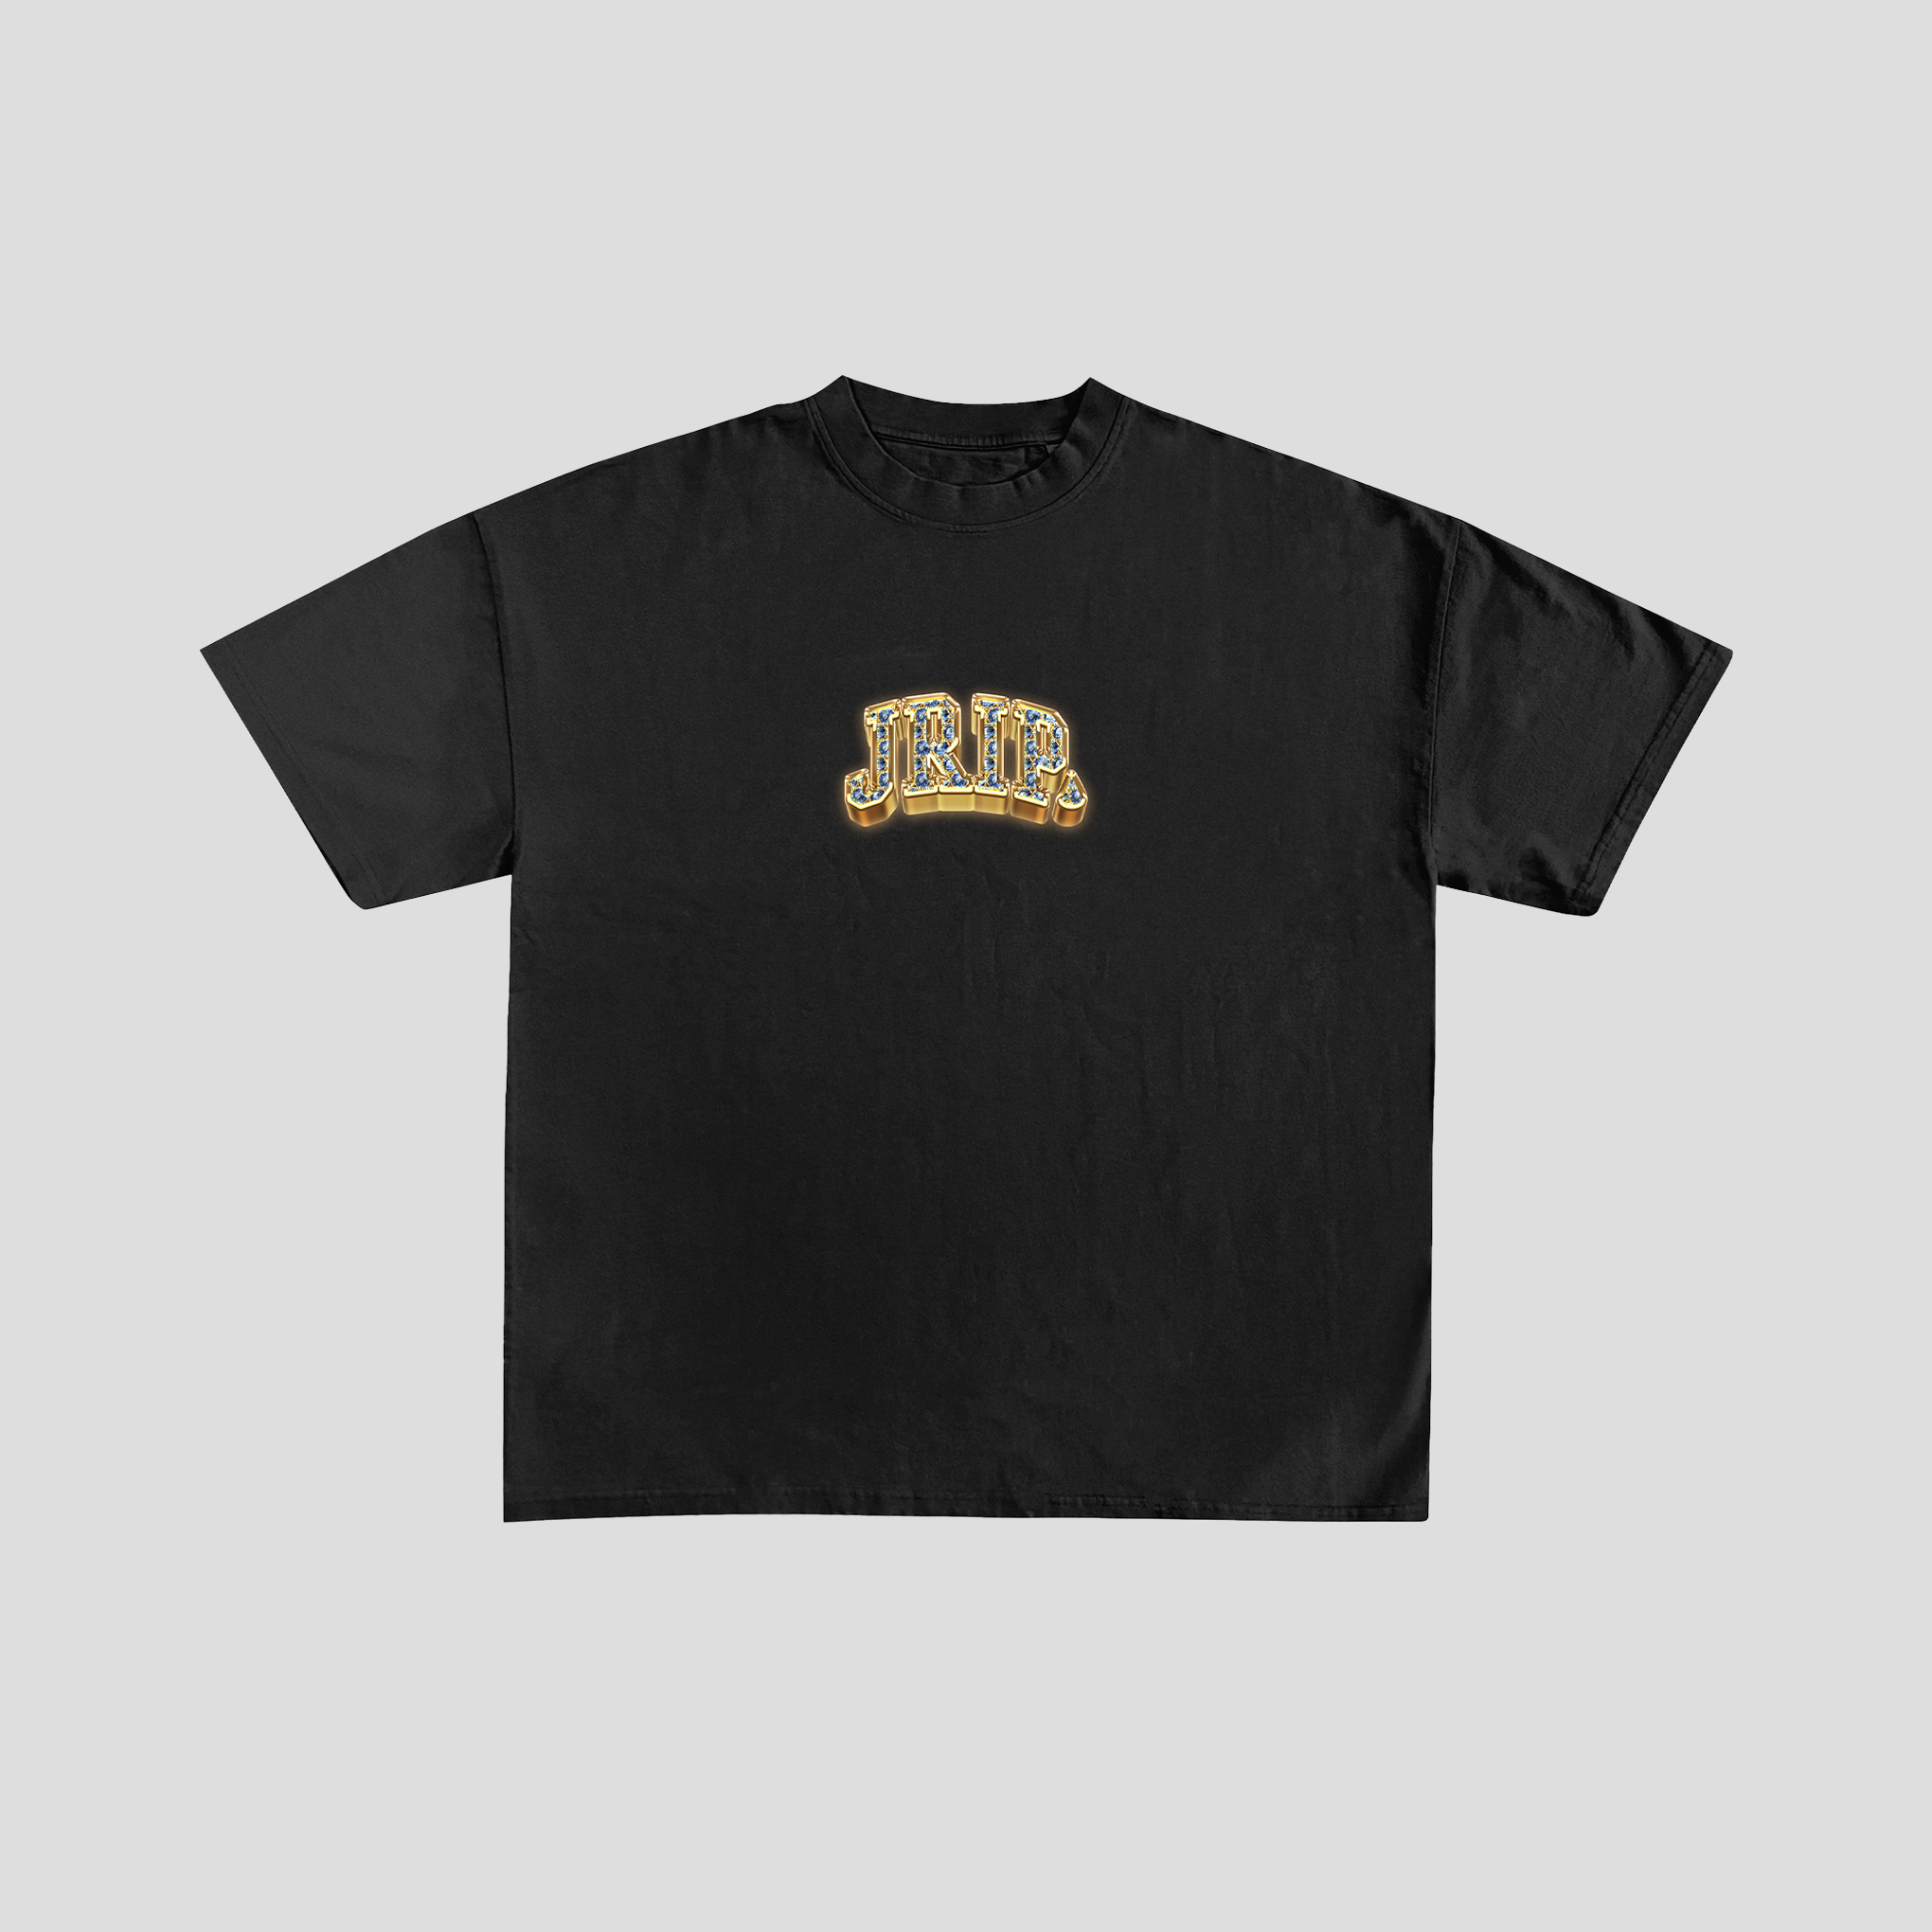 Jrip Bling T-Shirt (BLACK)